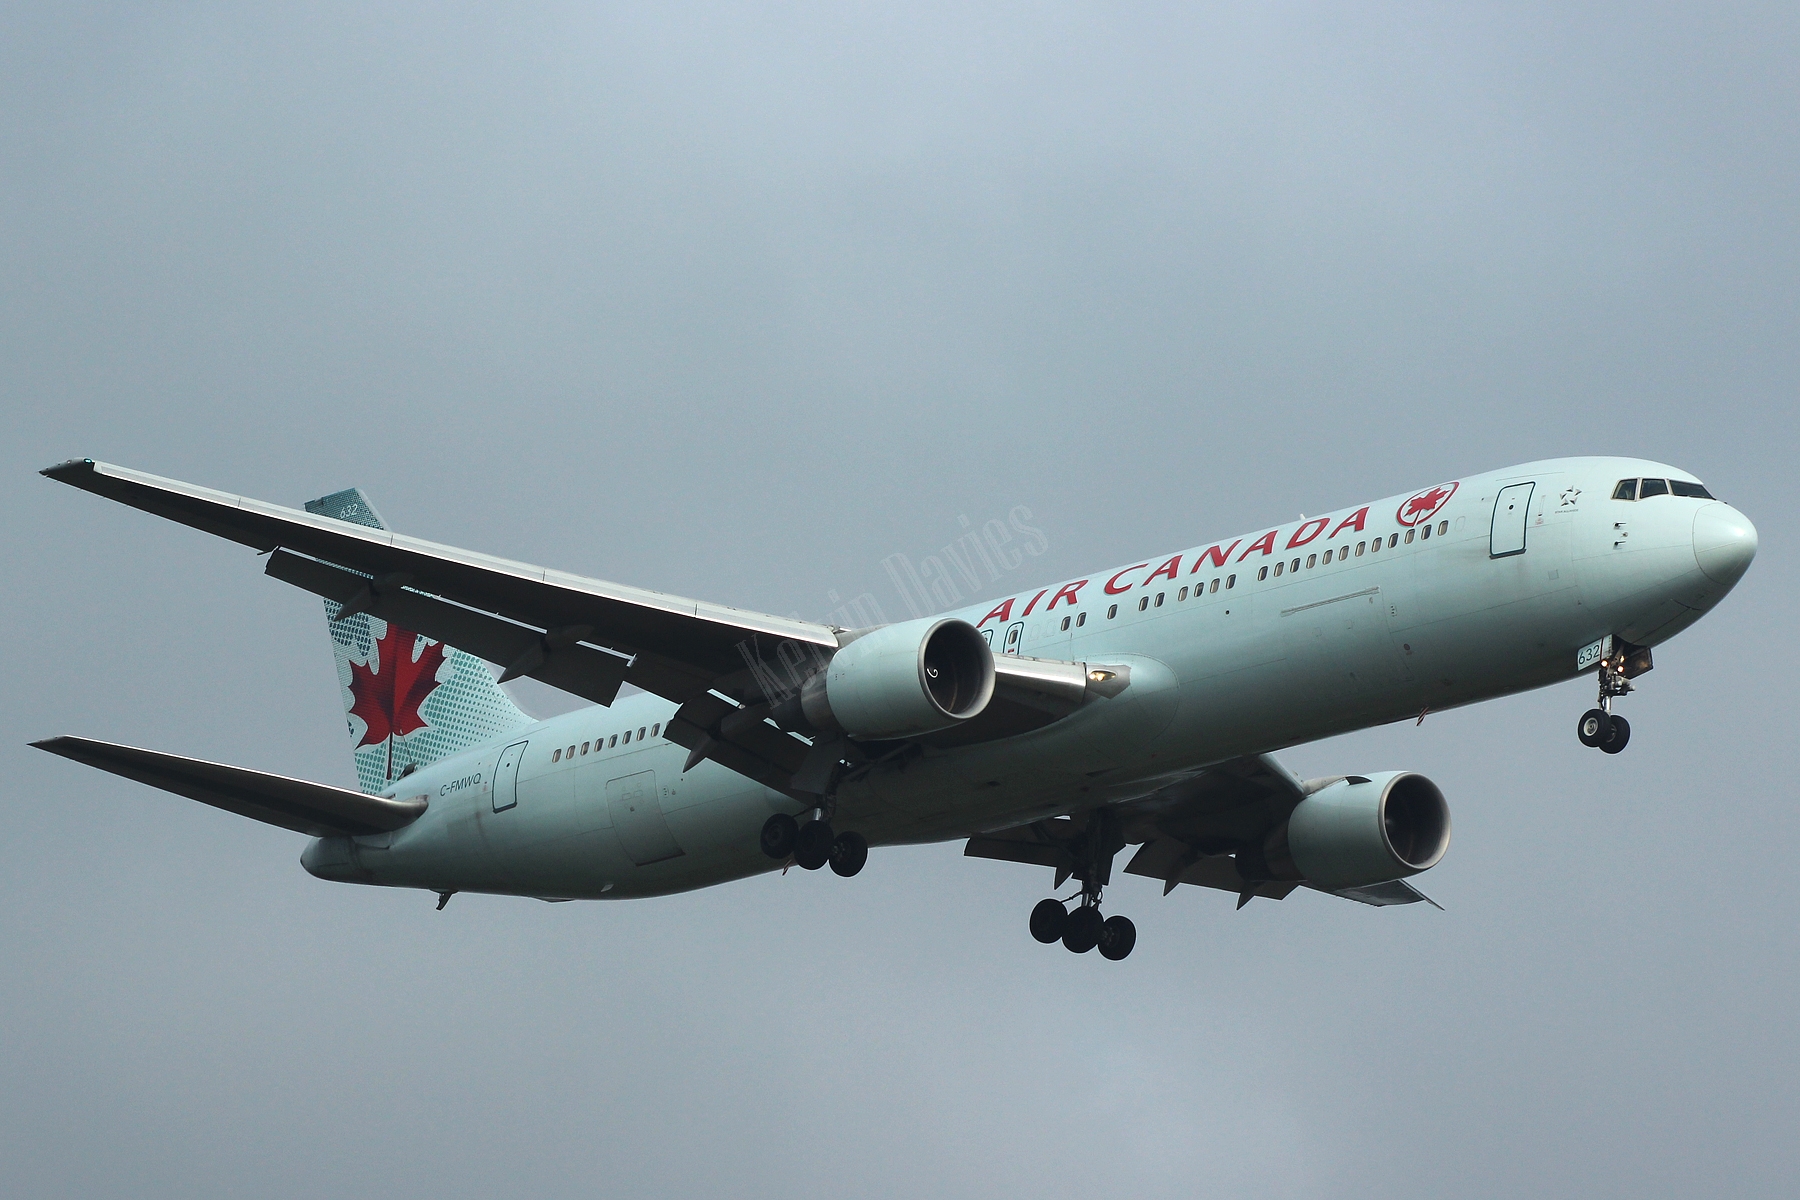 Air Canada 767 C-FMWQ